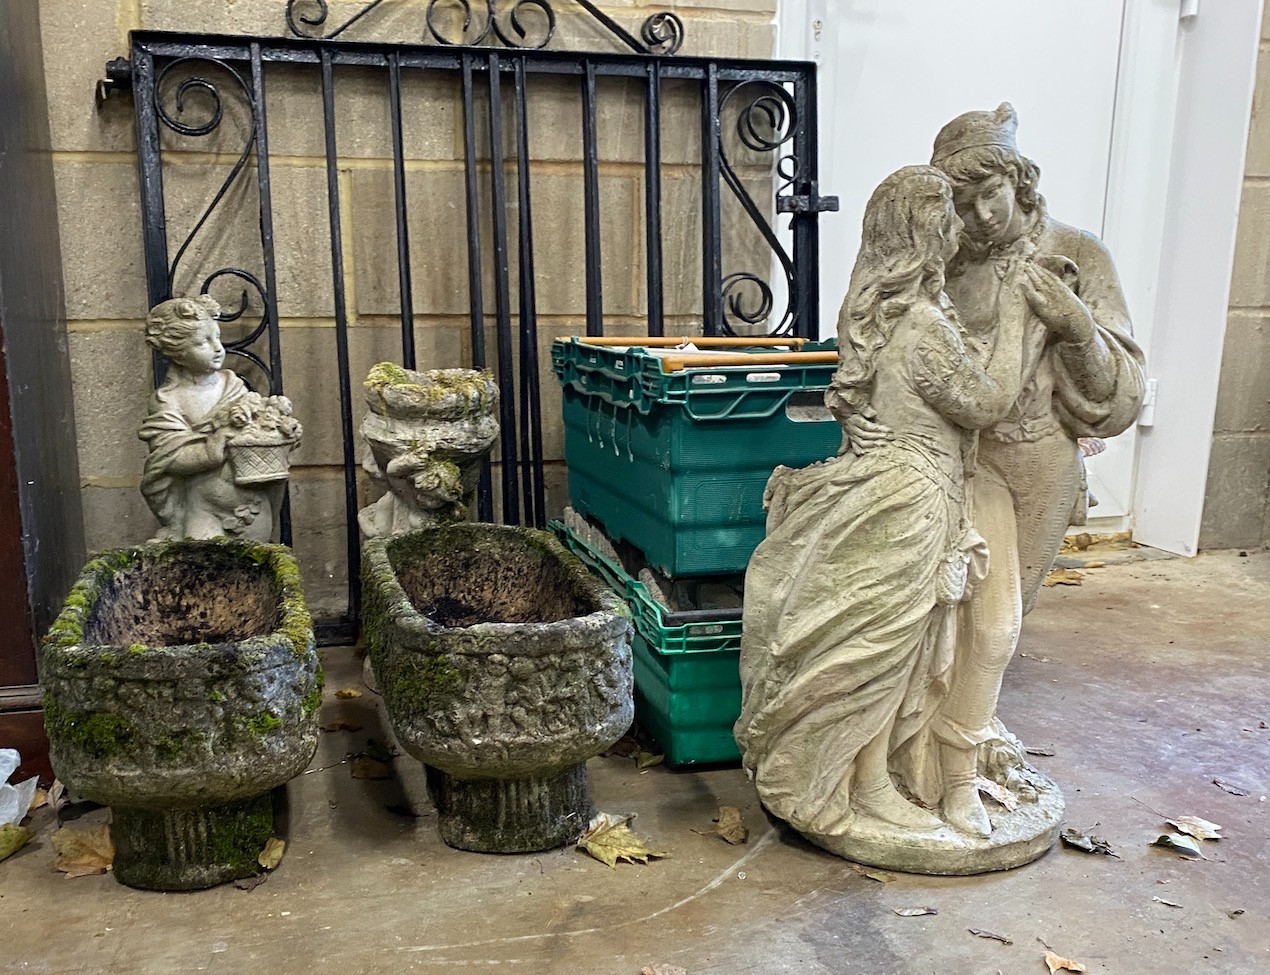 A small pair of rounded rectangular garden planters, a bird bath and two garden figures